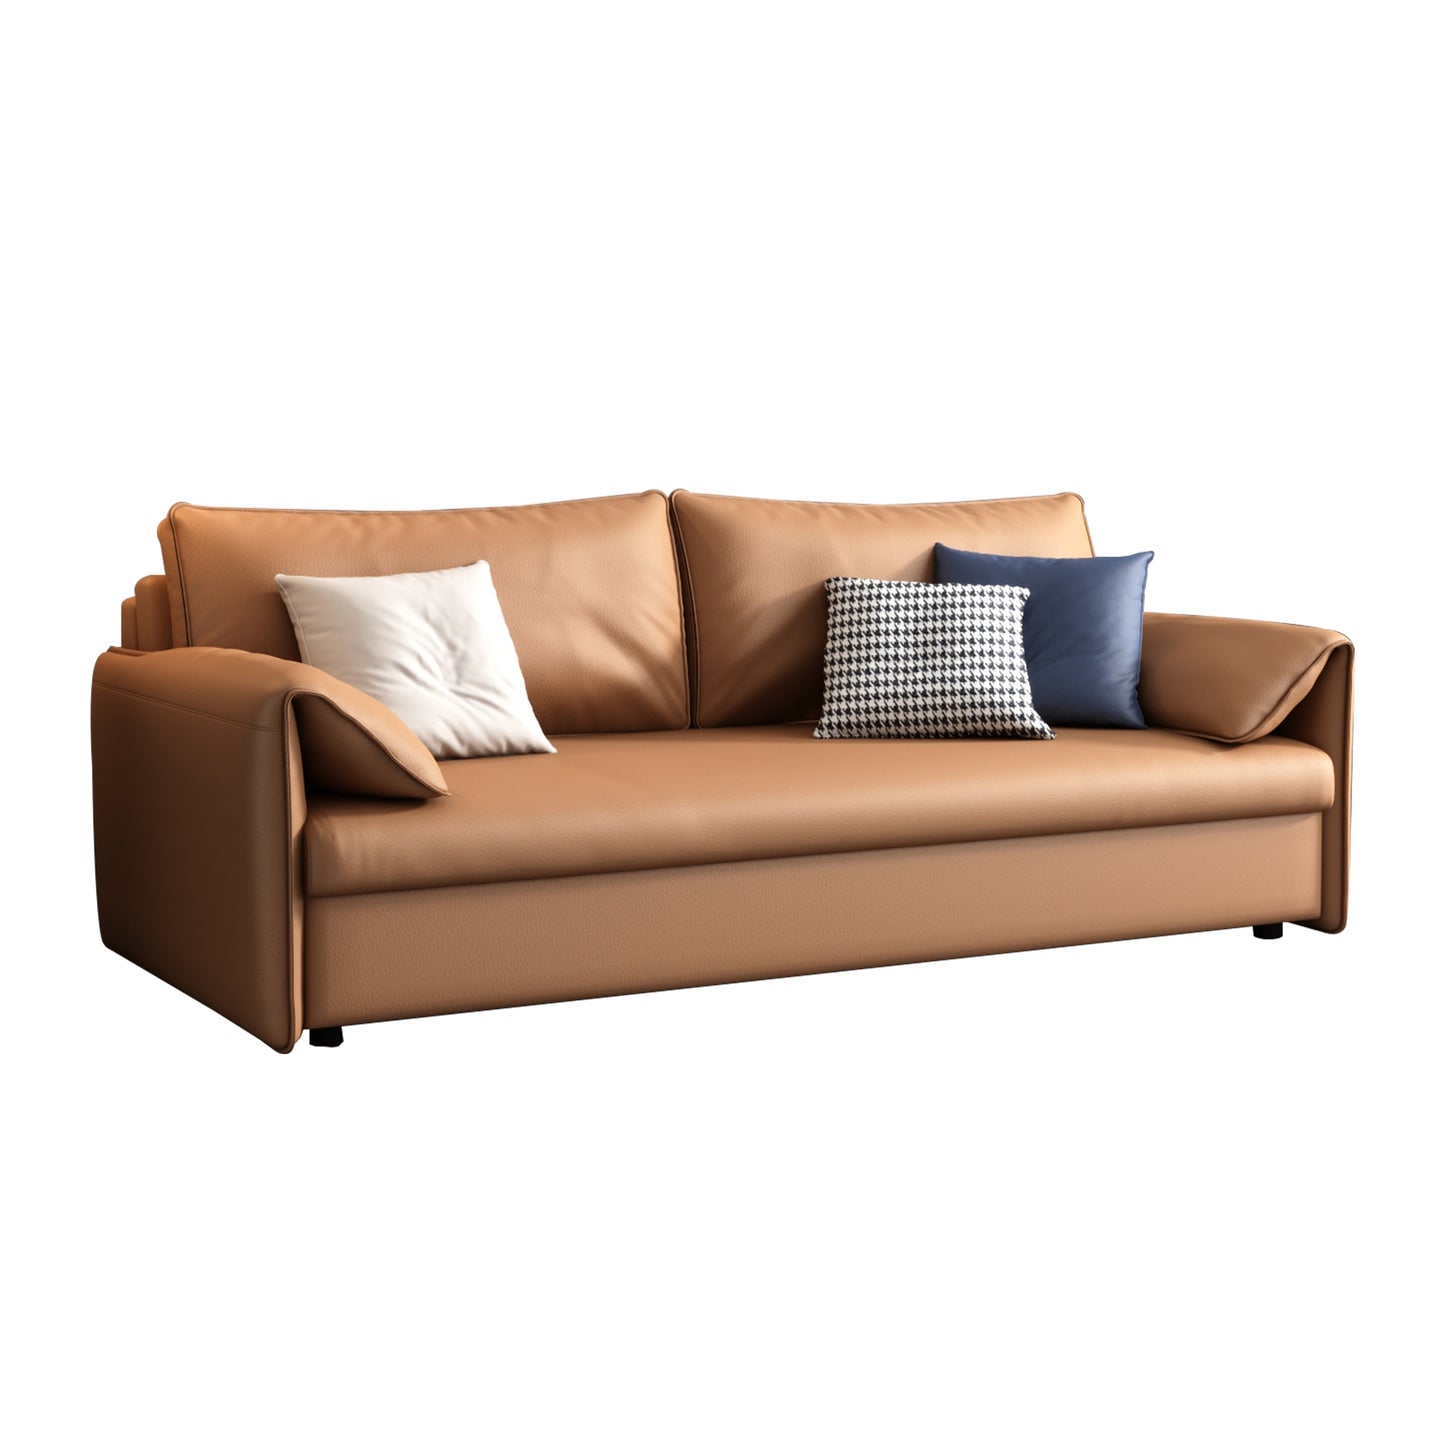 JASIWYA Expandable Sofa Bed Comfortable and Versatile